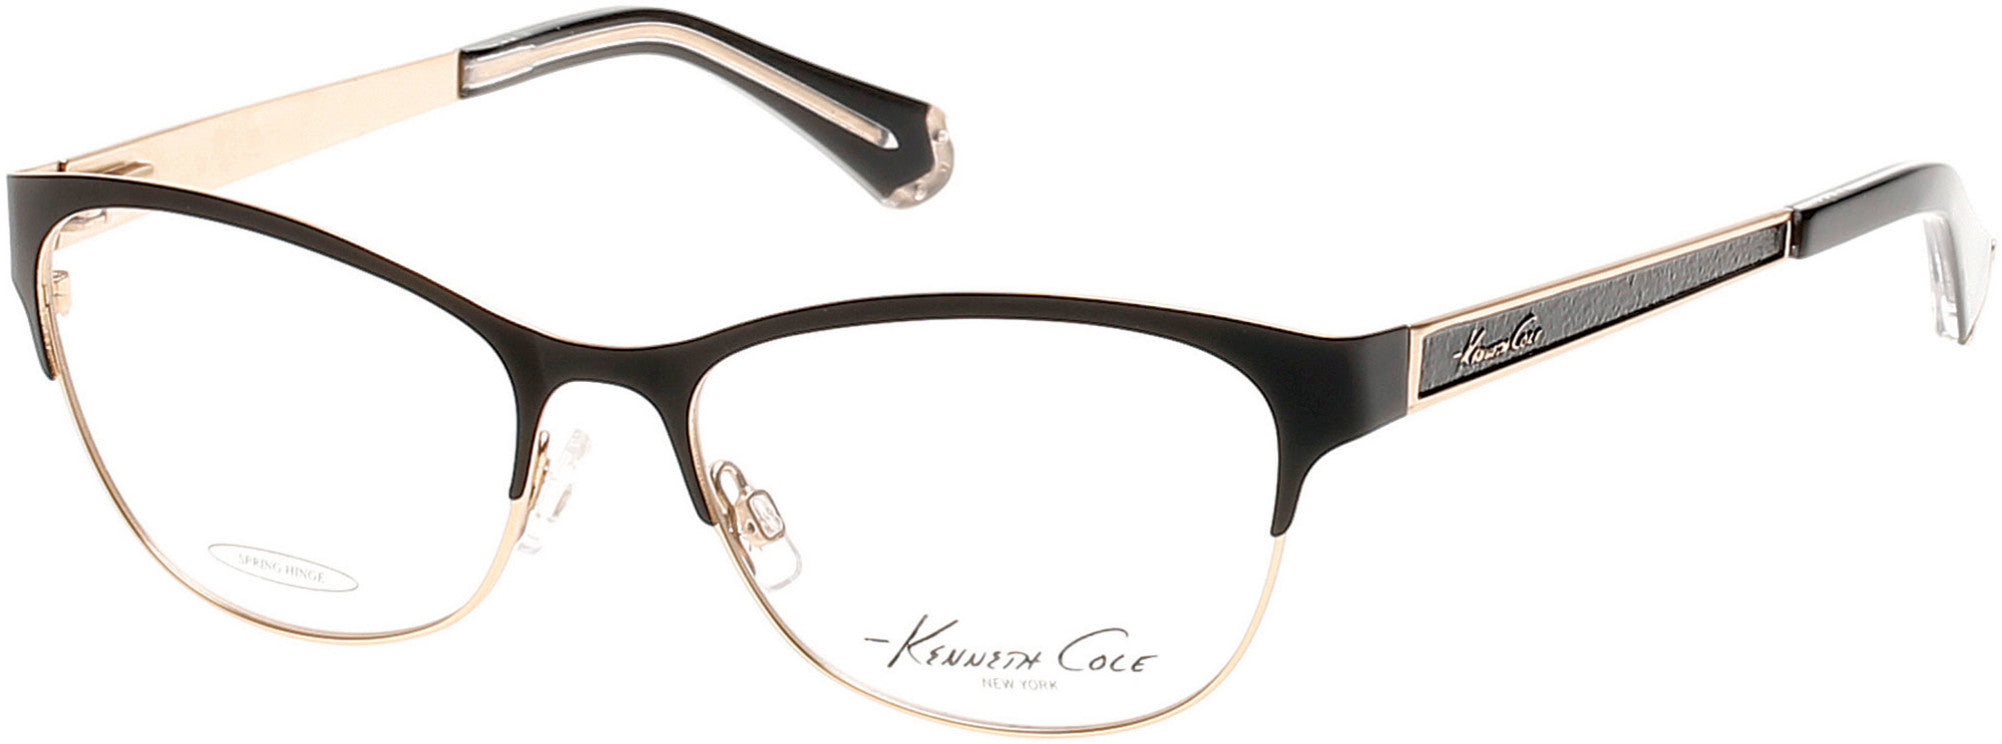 Kenneth Cole New York,Kenneth Cole Reaction KC0226 Eyeglasses 005-005 - Black/other